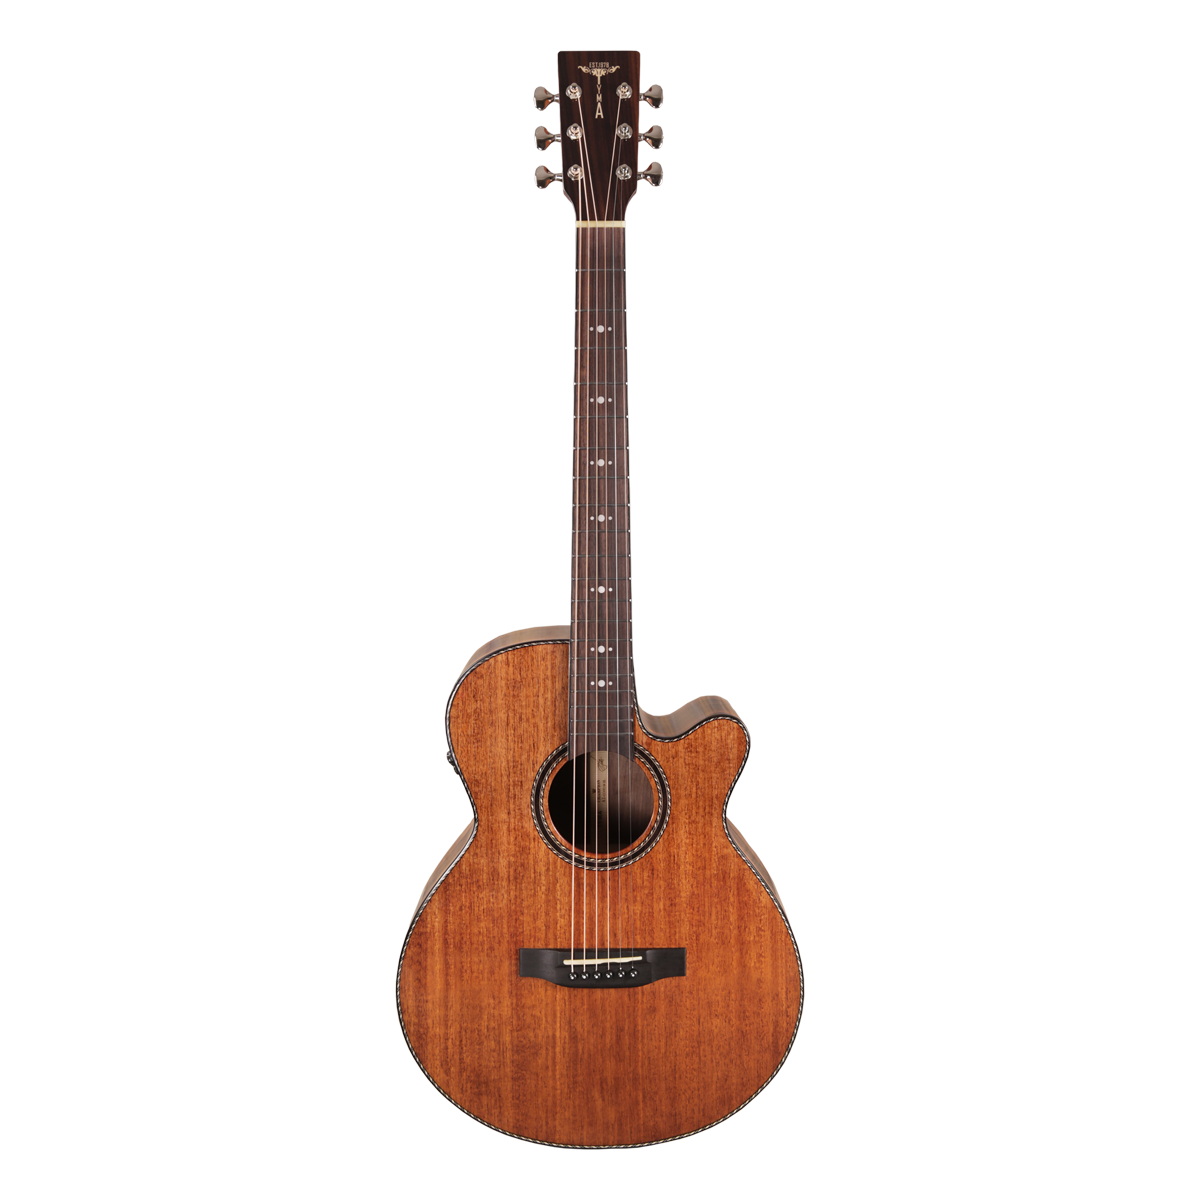 Tyma A1 Custom ZL трансакустическая гитара в комплекте с аксессуарами